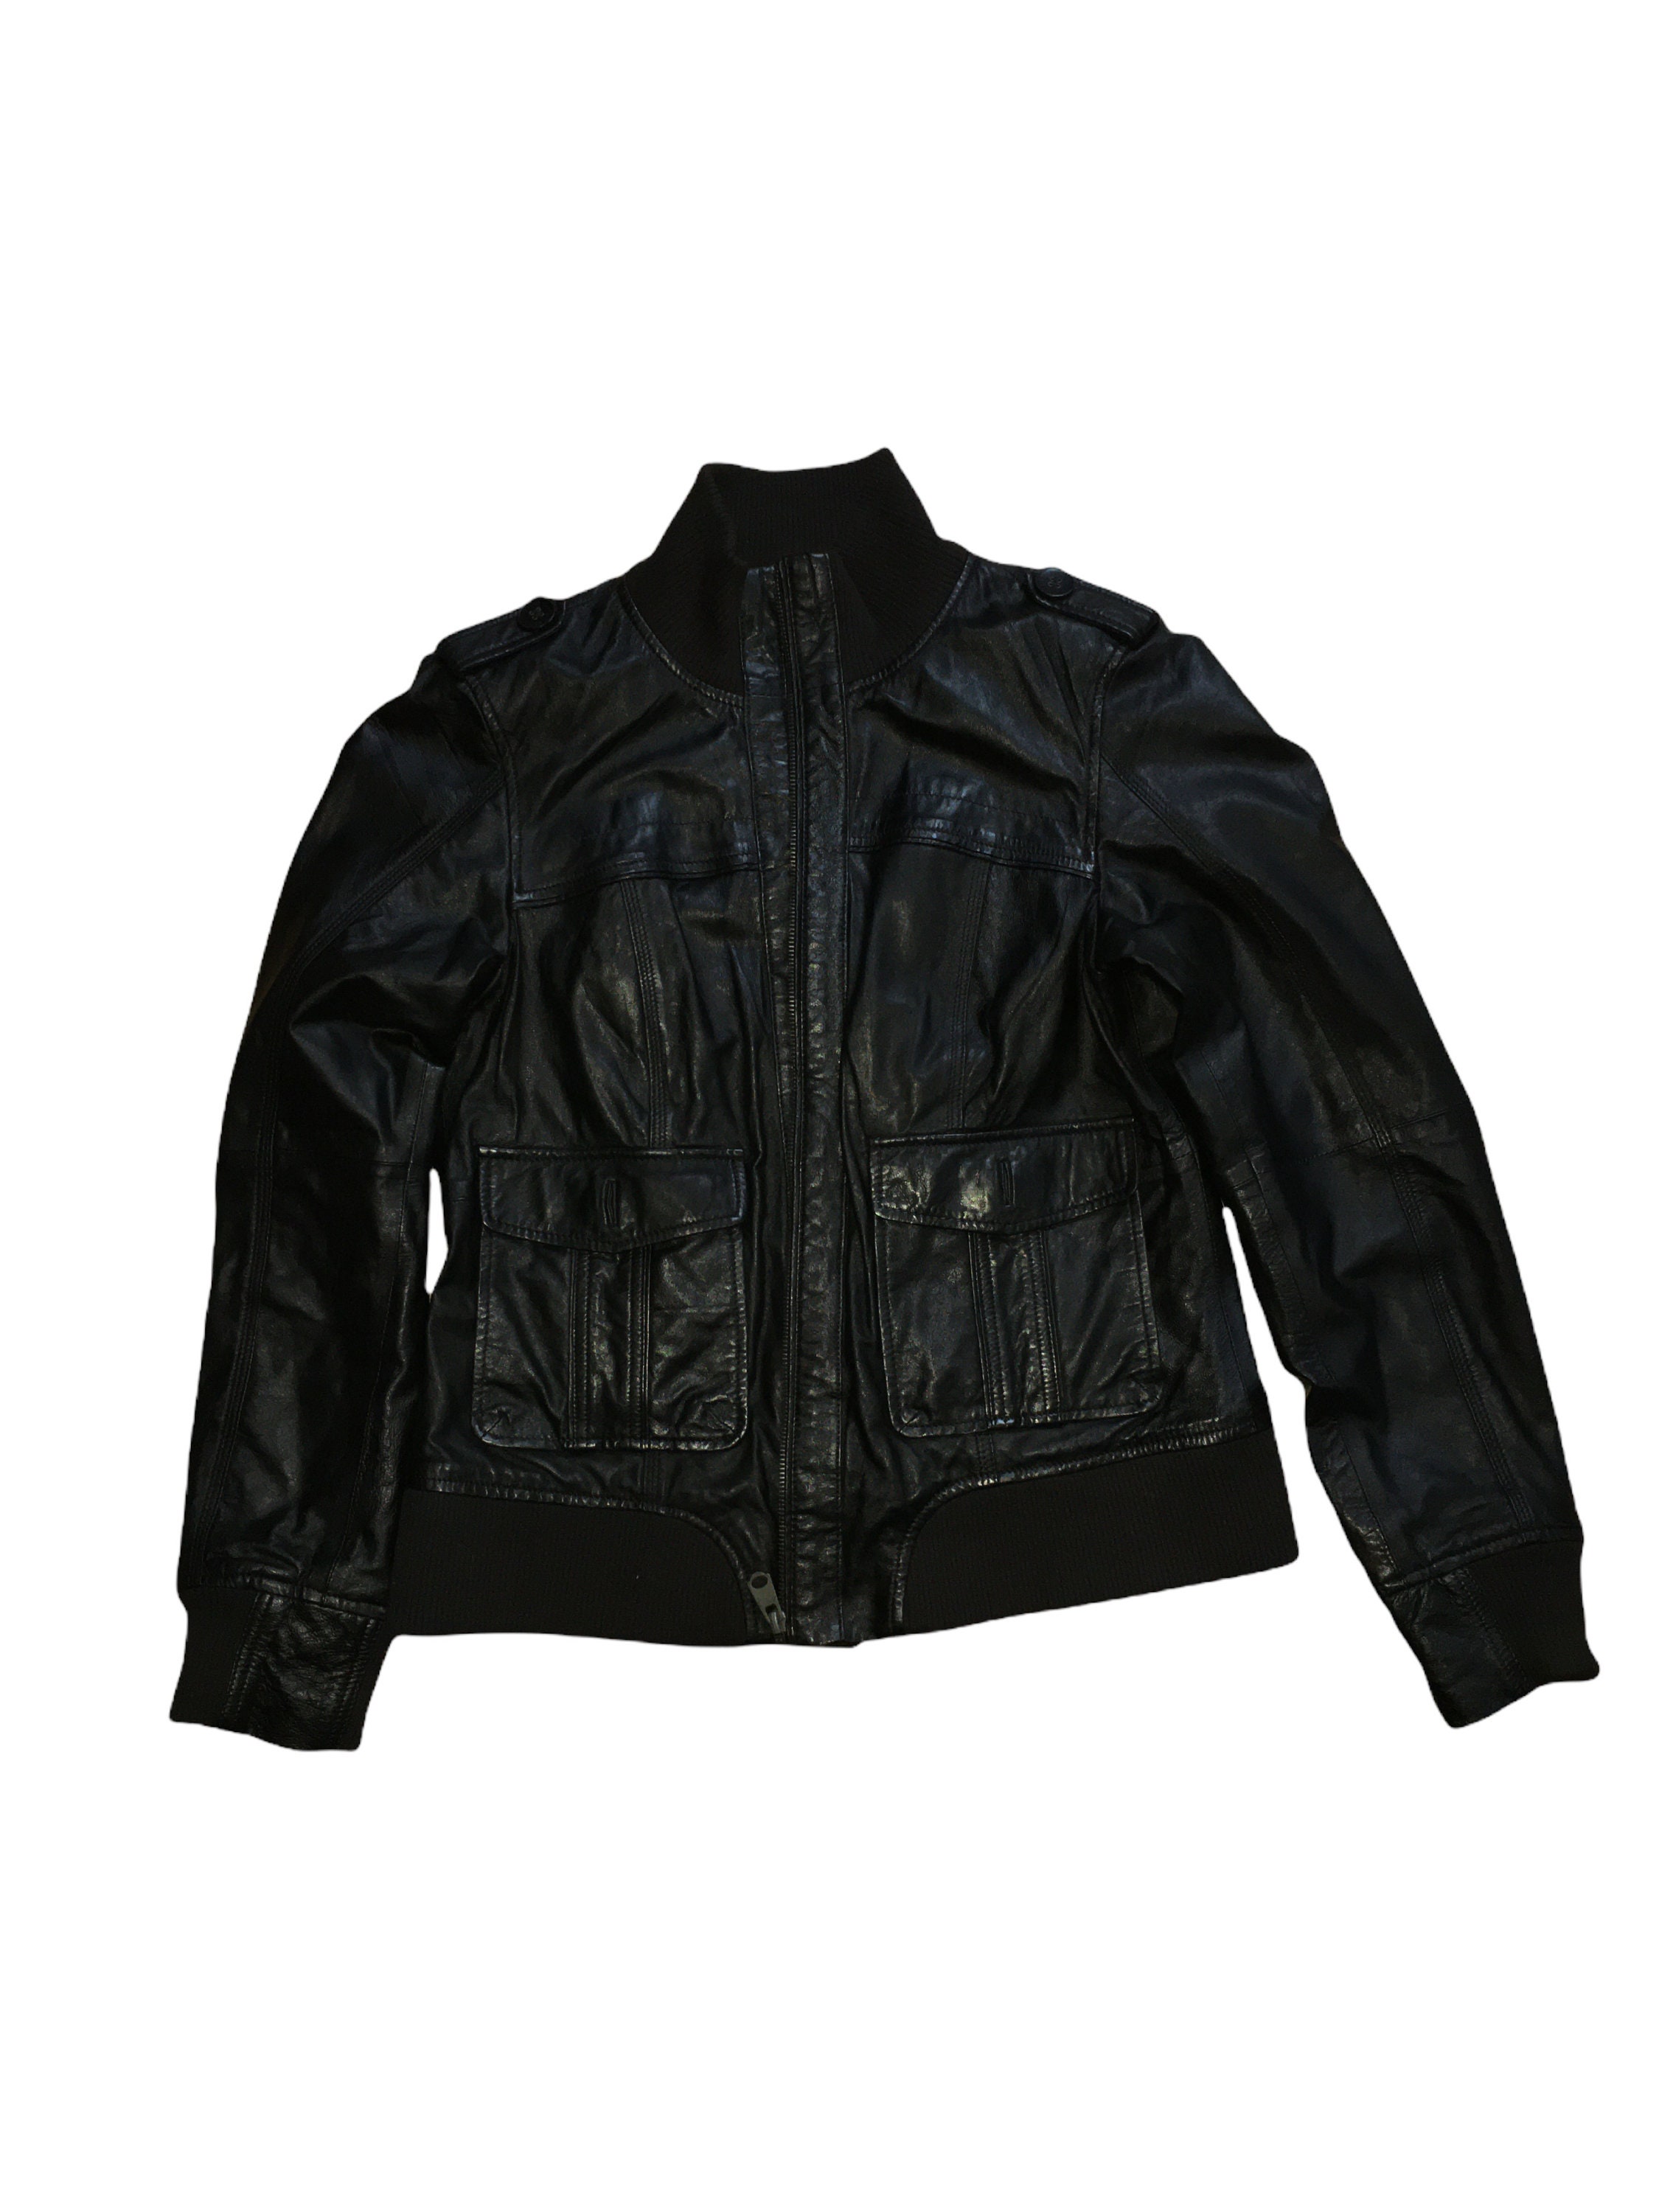 zweer Nauwkeurig Aap VINTAGE Ultra Rare Authentic Line Edc Leather Jacket - Etsy